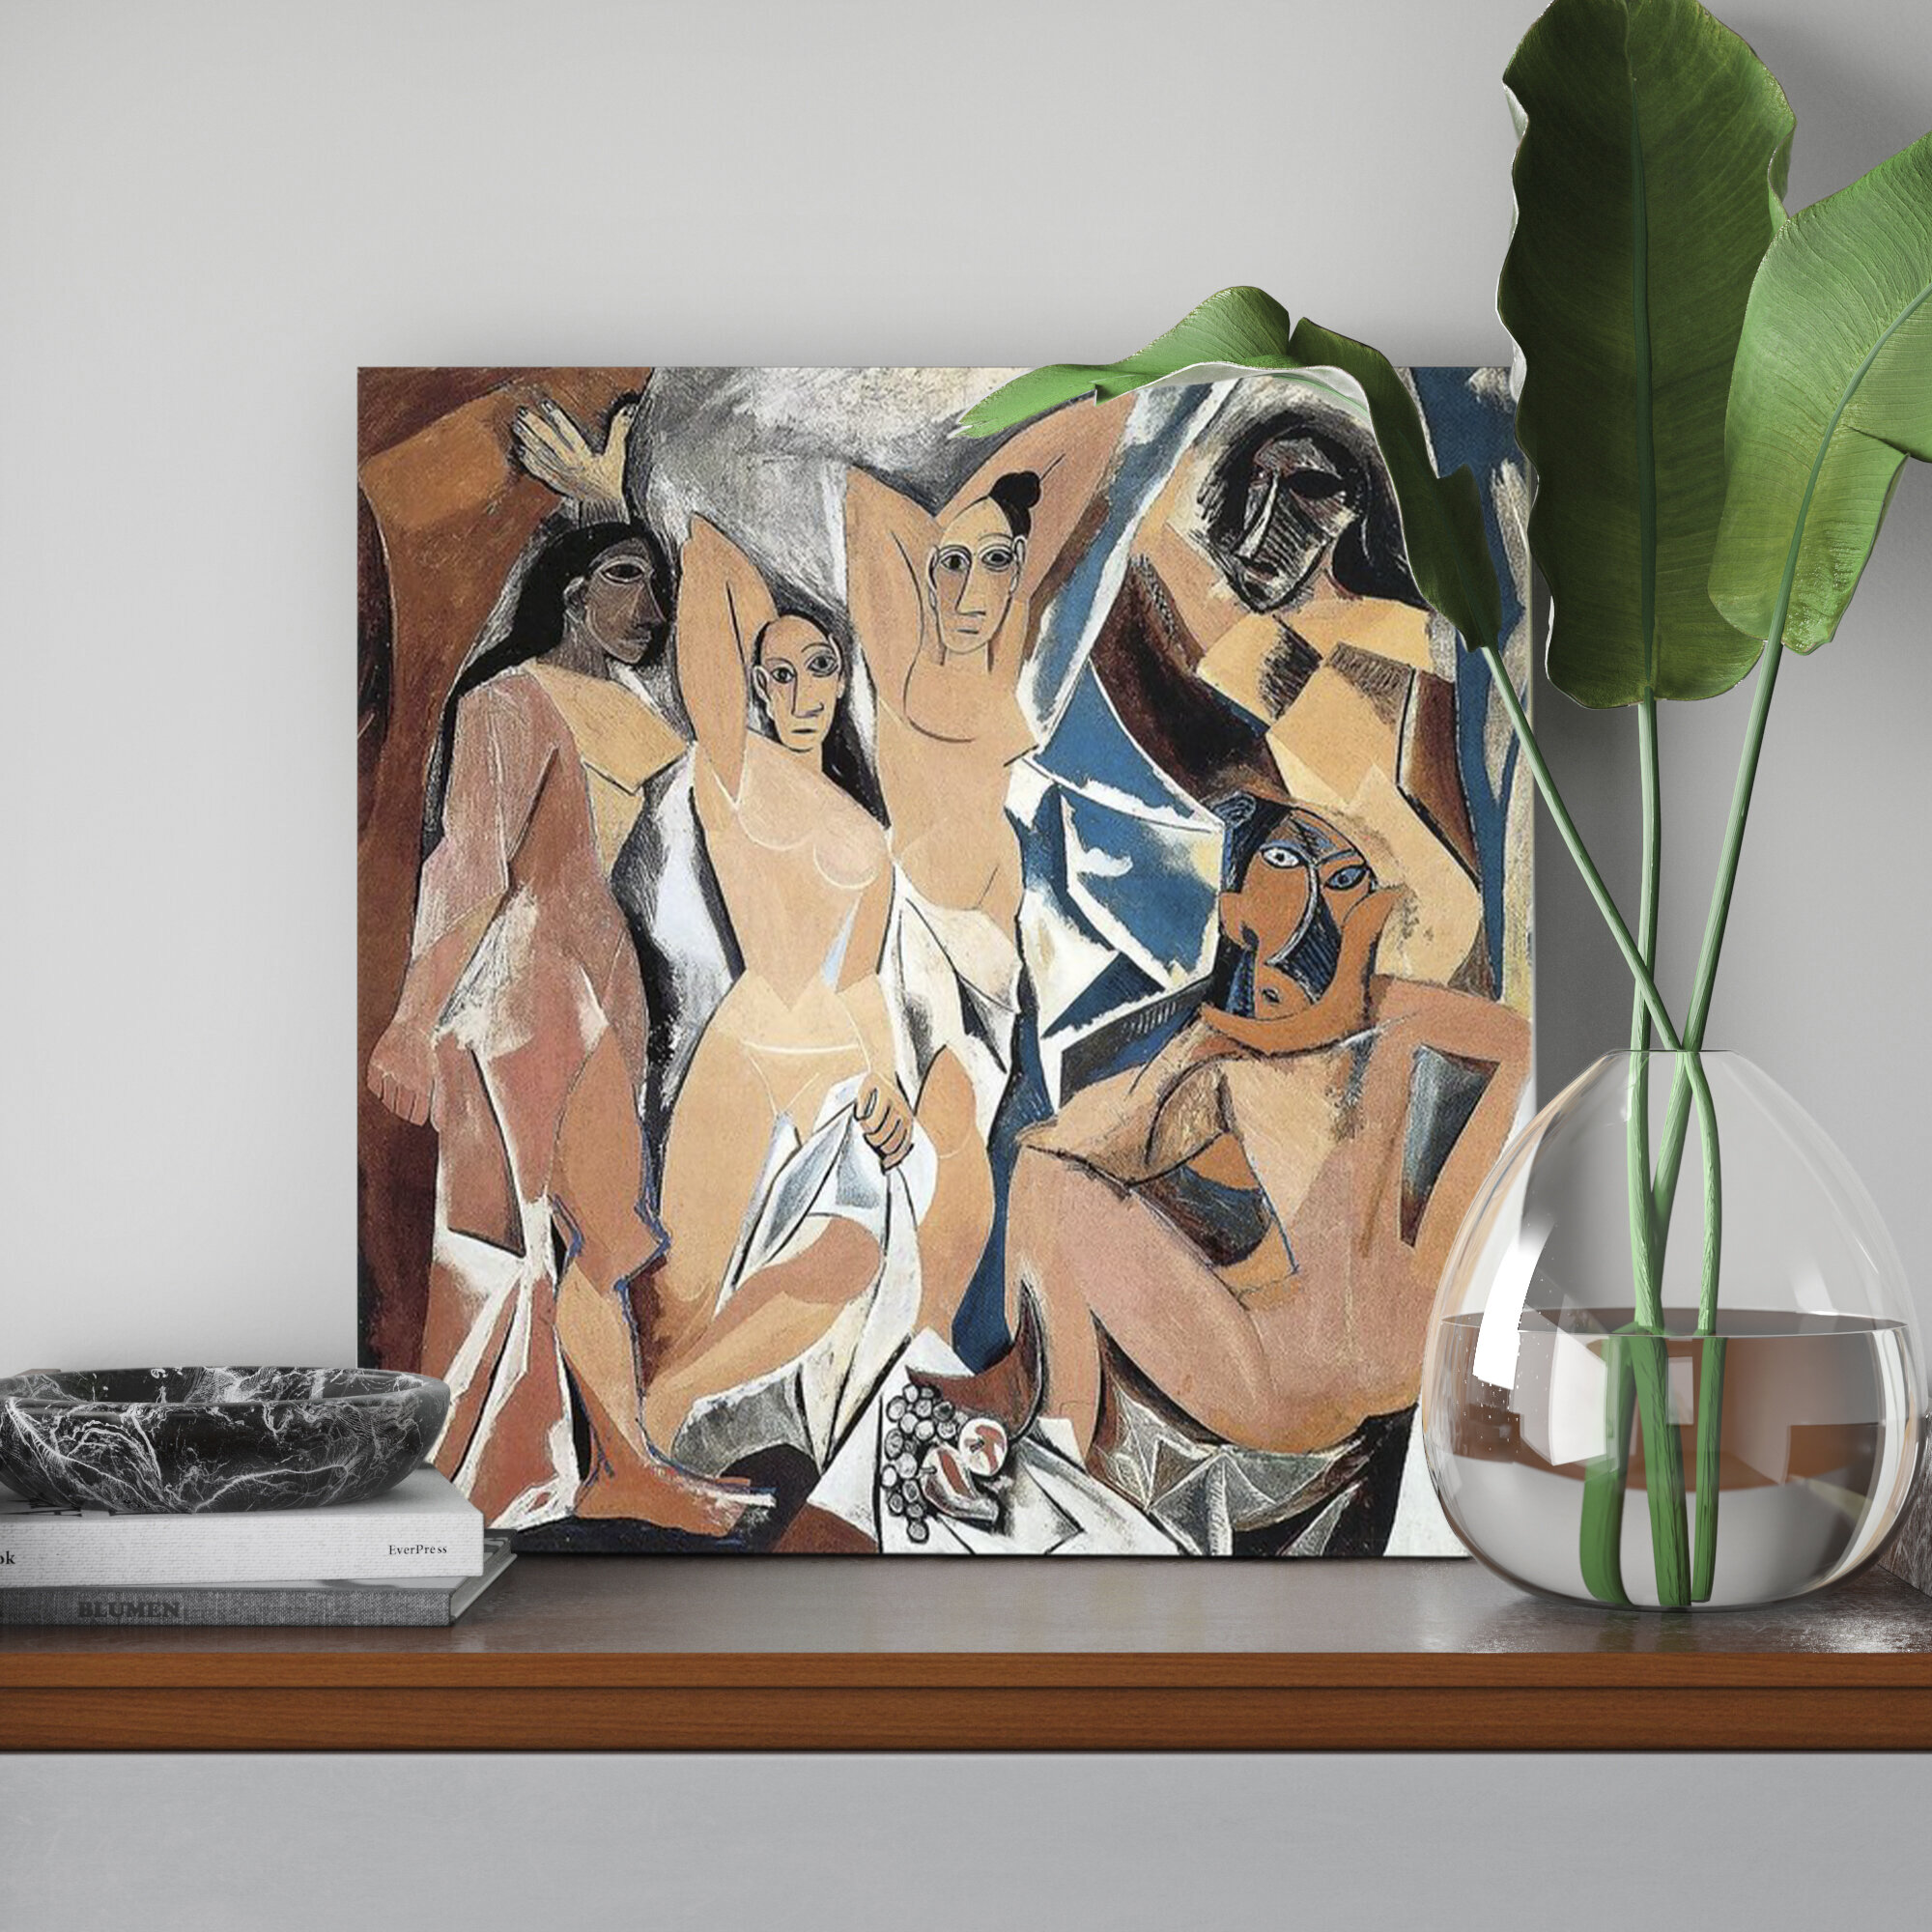 ClassicLiving Les Demoiselles D'Avignon by Pablo Picasso - Painting on  Canvas & Reviews